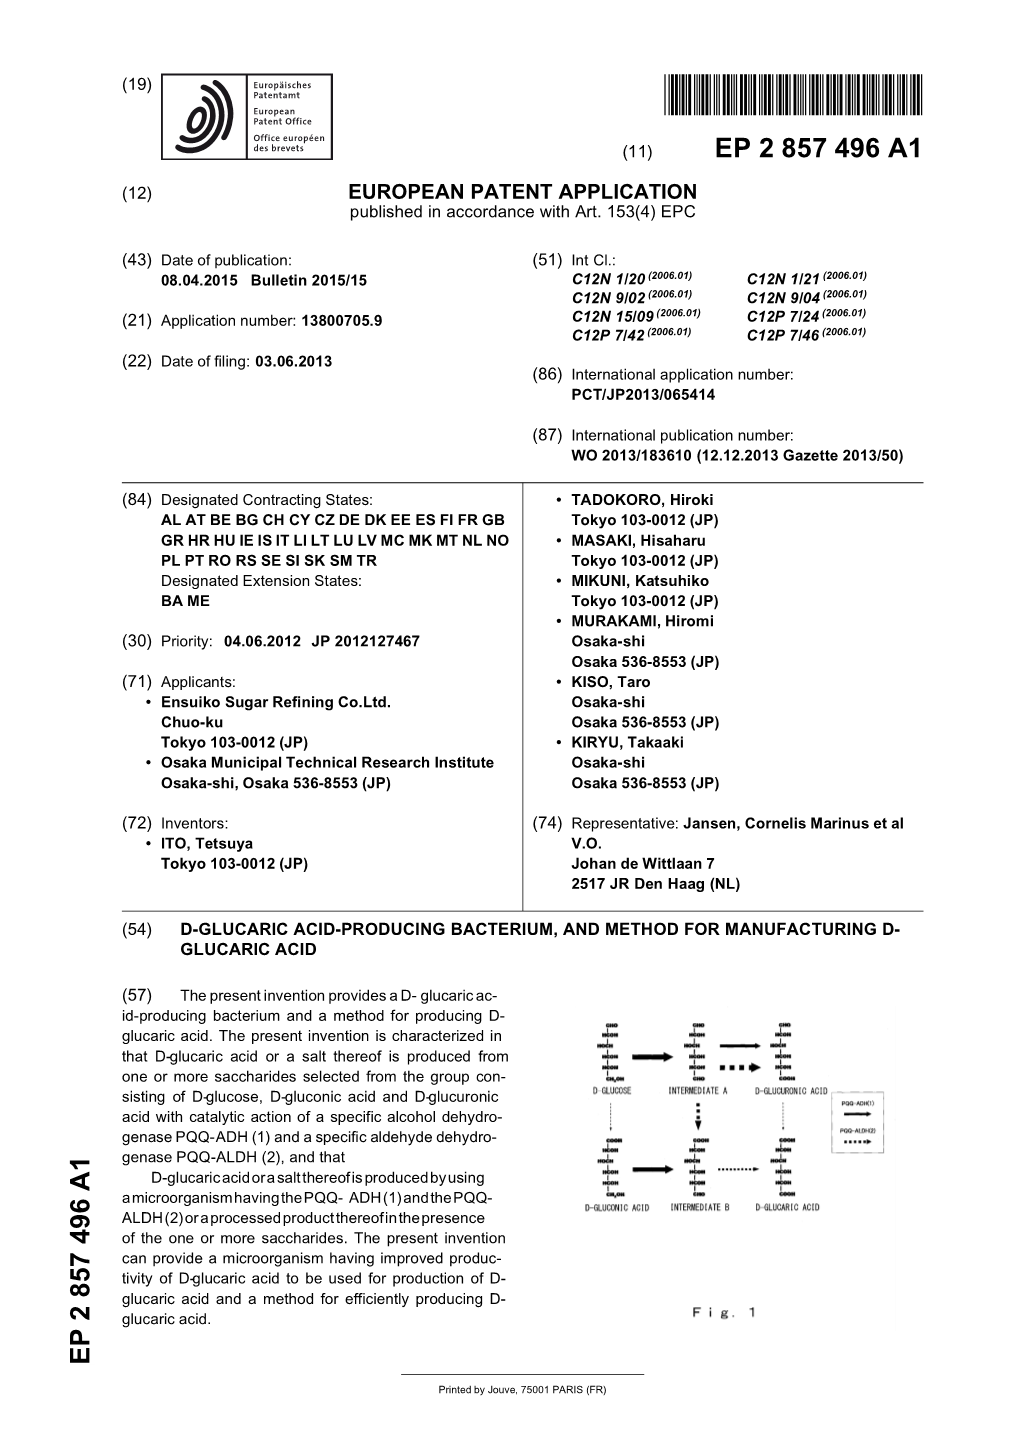 D-Glucaric Acid-Producing Bacterium, and Method for Manufacturing D-Glucaric Acid